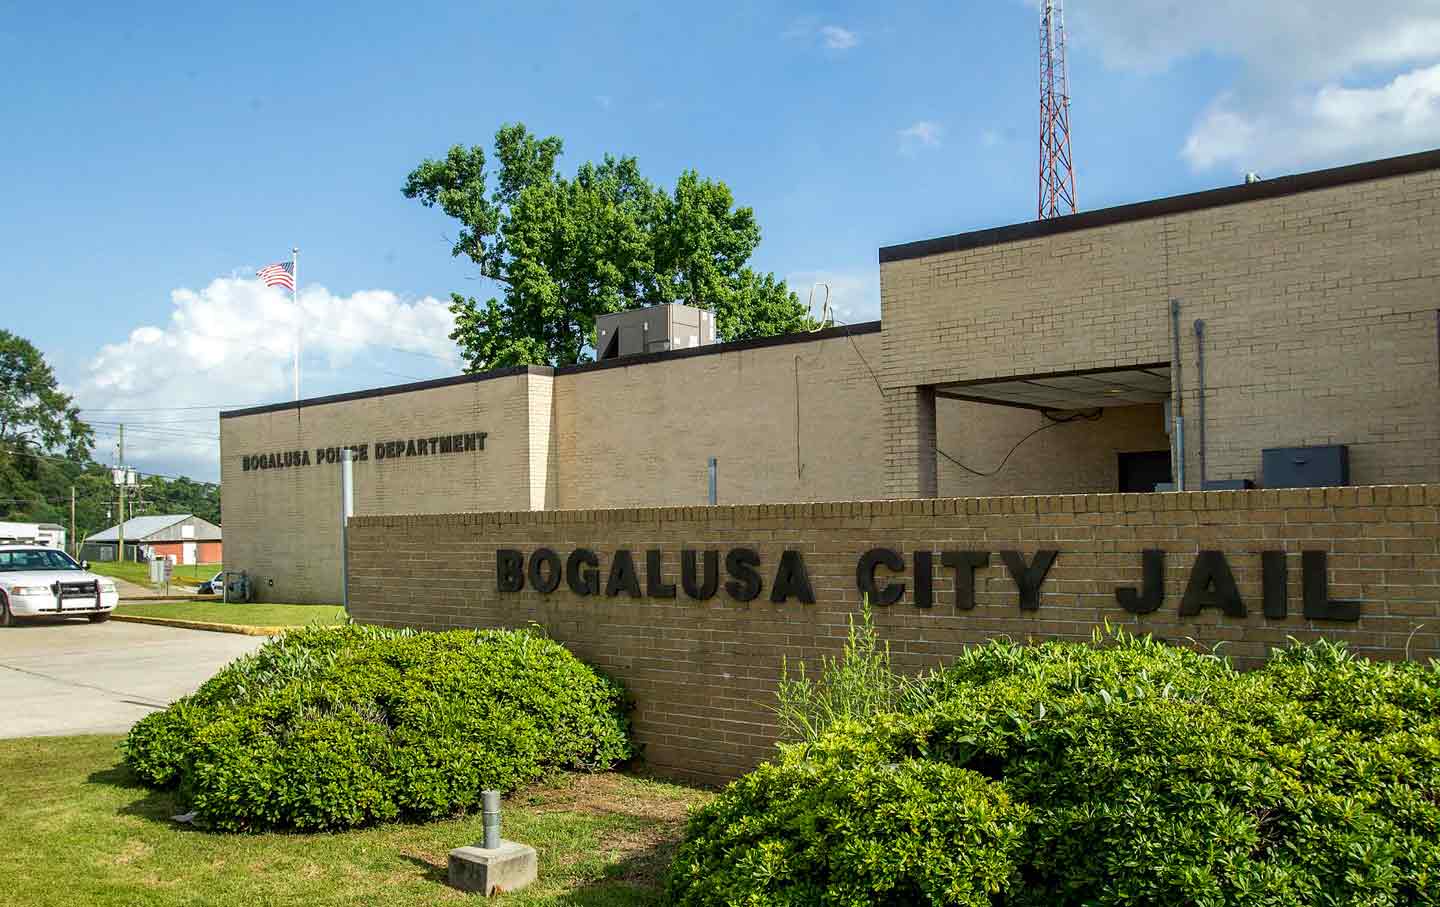 Bogalusa City Jail